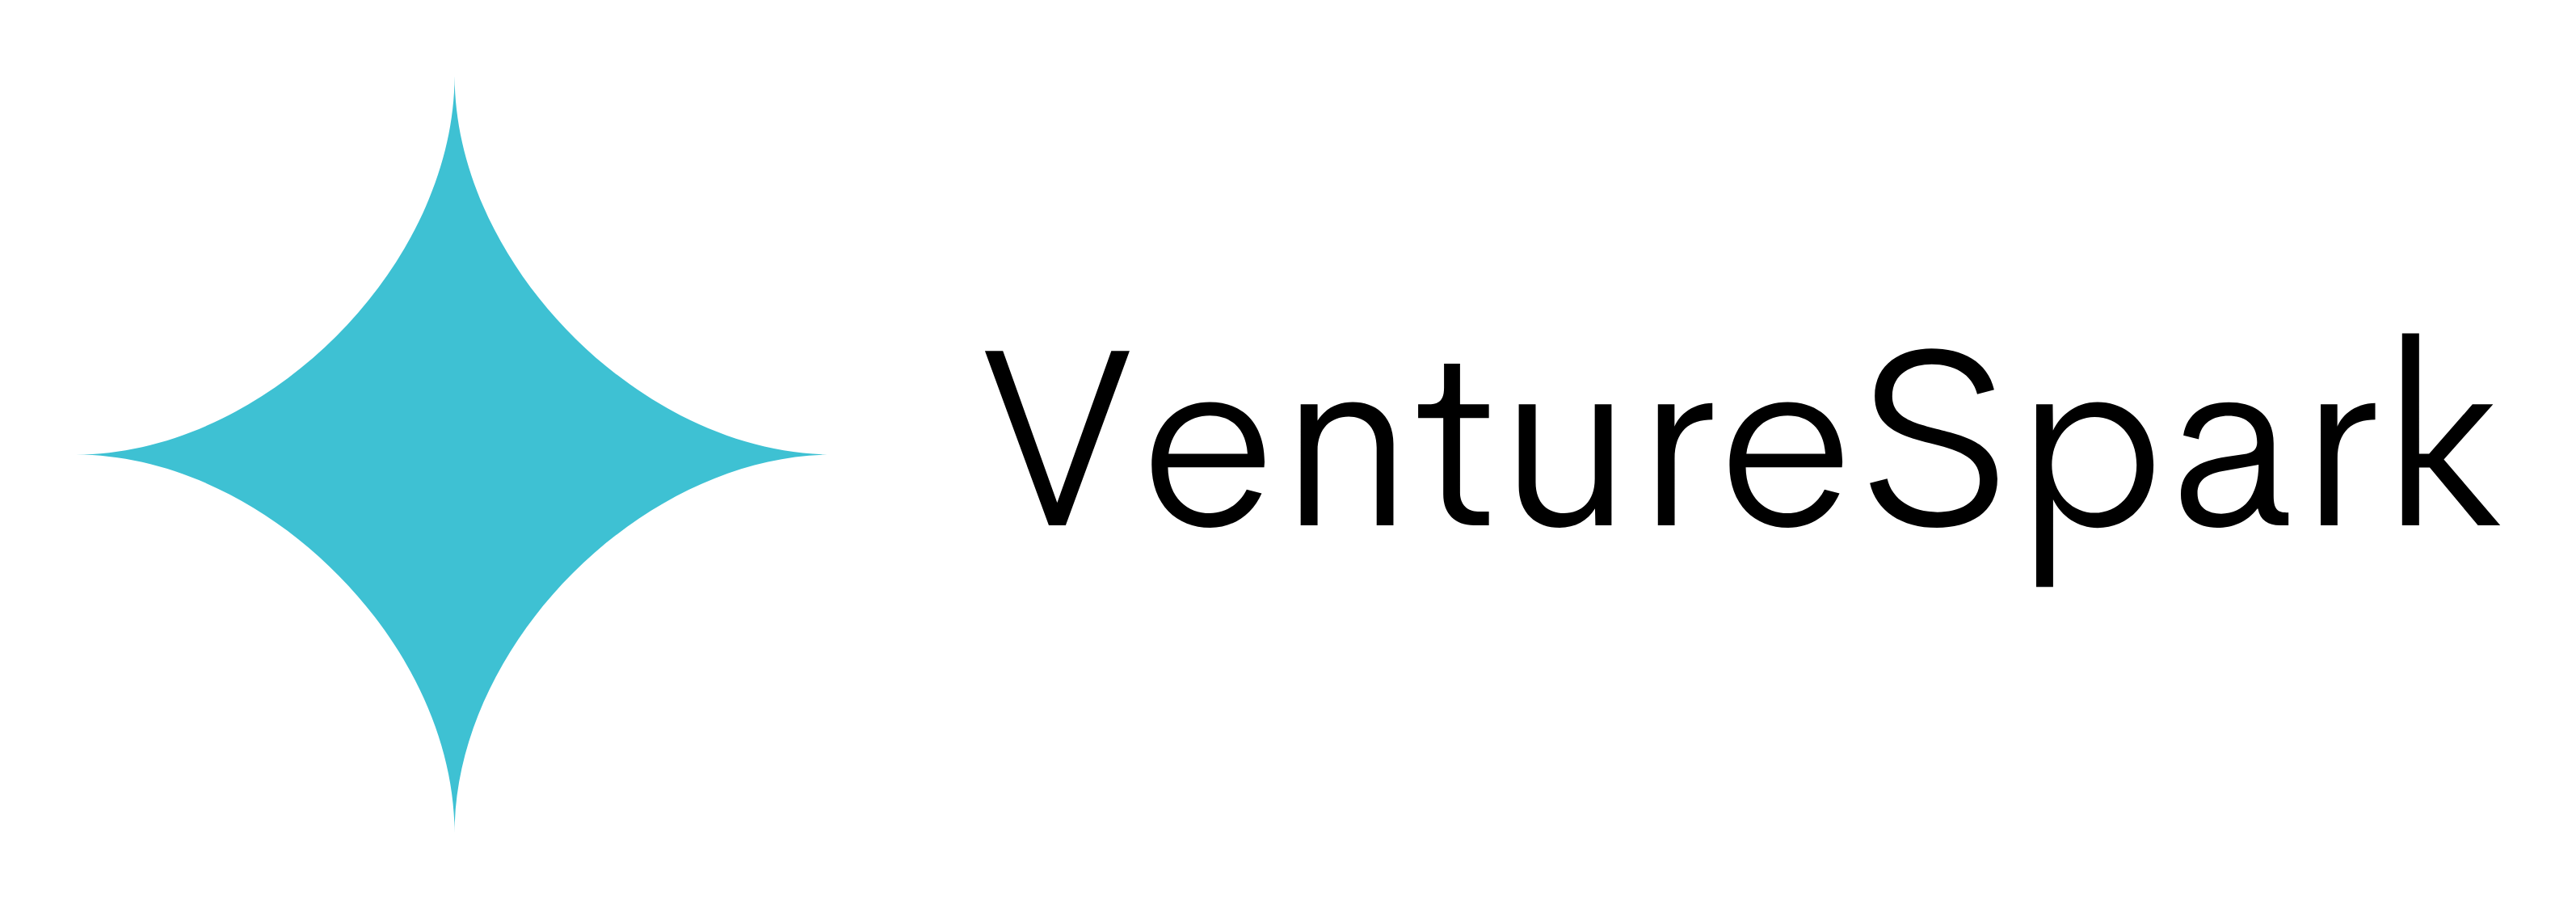 Color logo with background VentureSpark